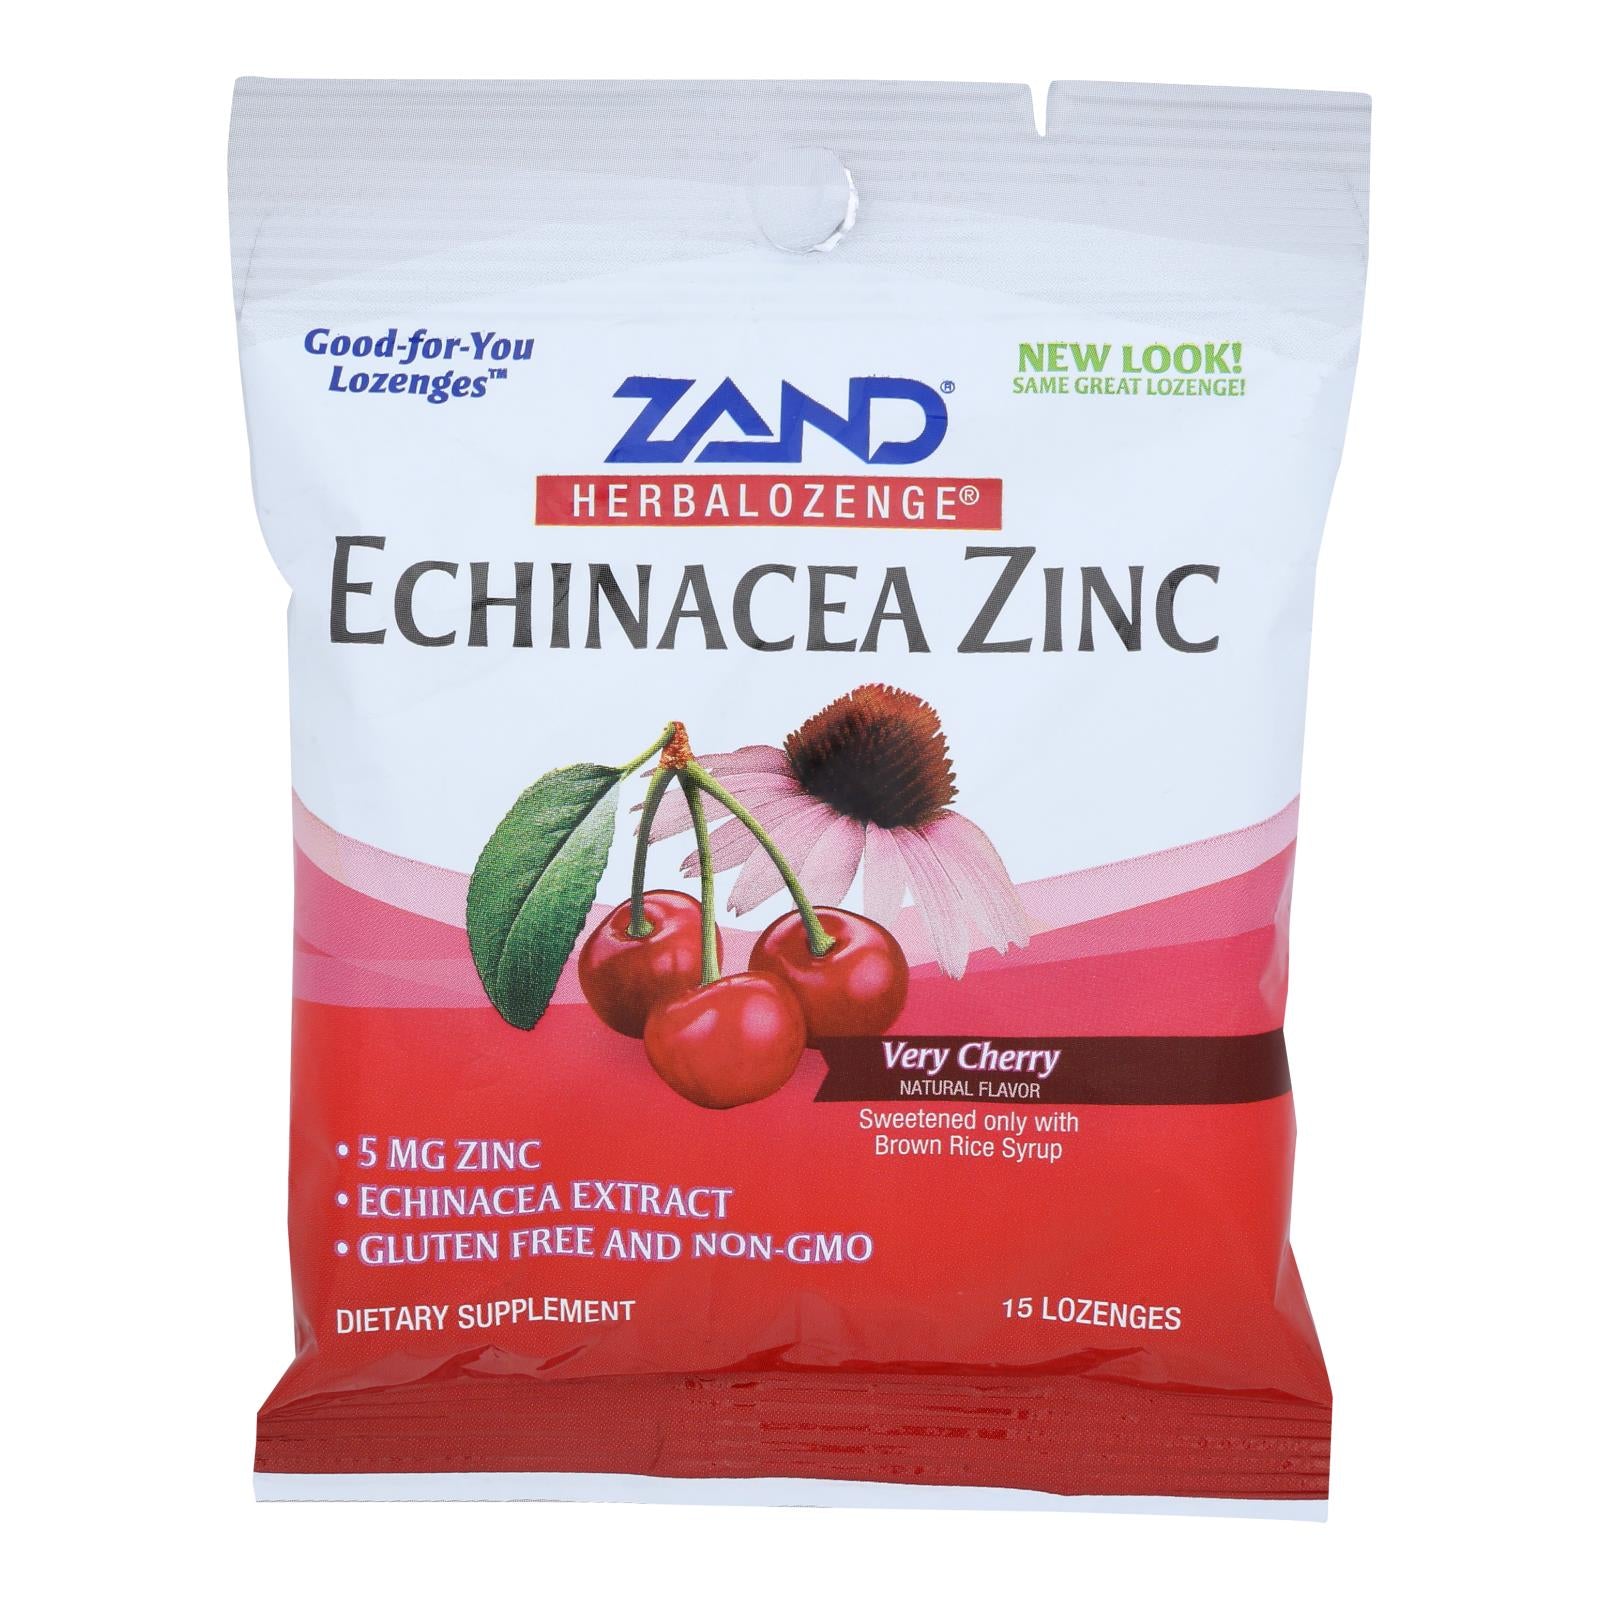 Zand Herbalozenge Echinacea Zinc Natural Cherry - 15 Lozenges - Case Of 12